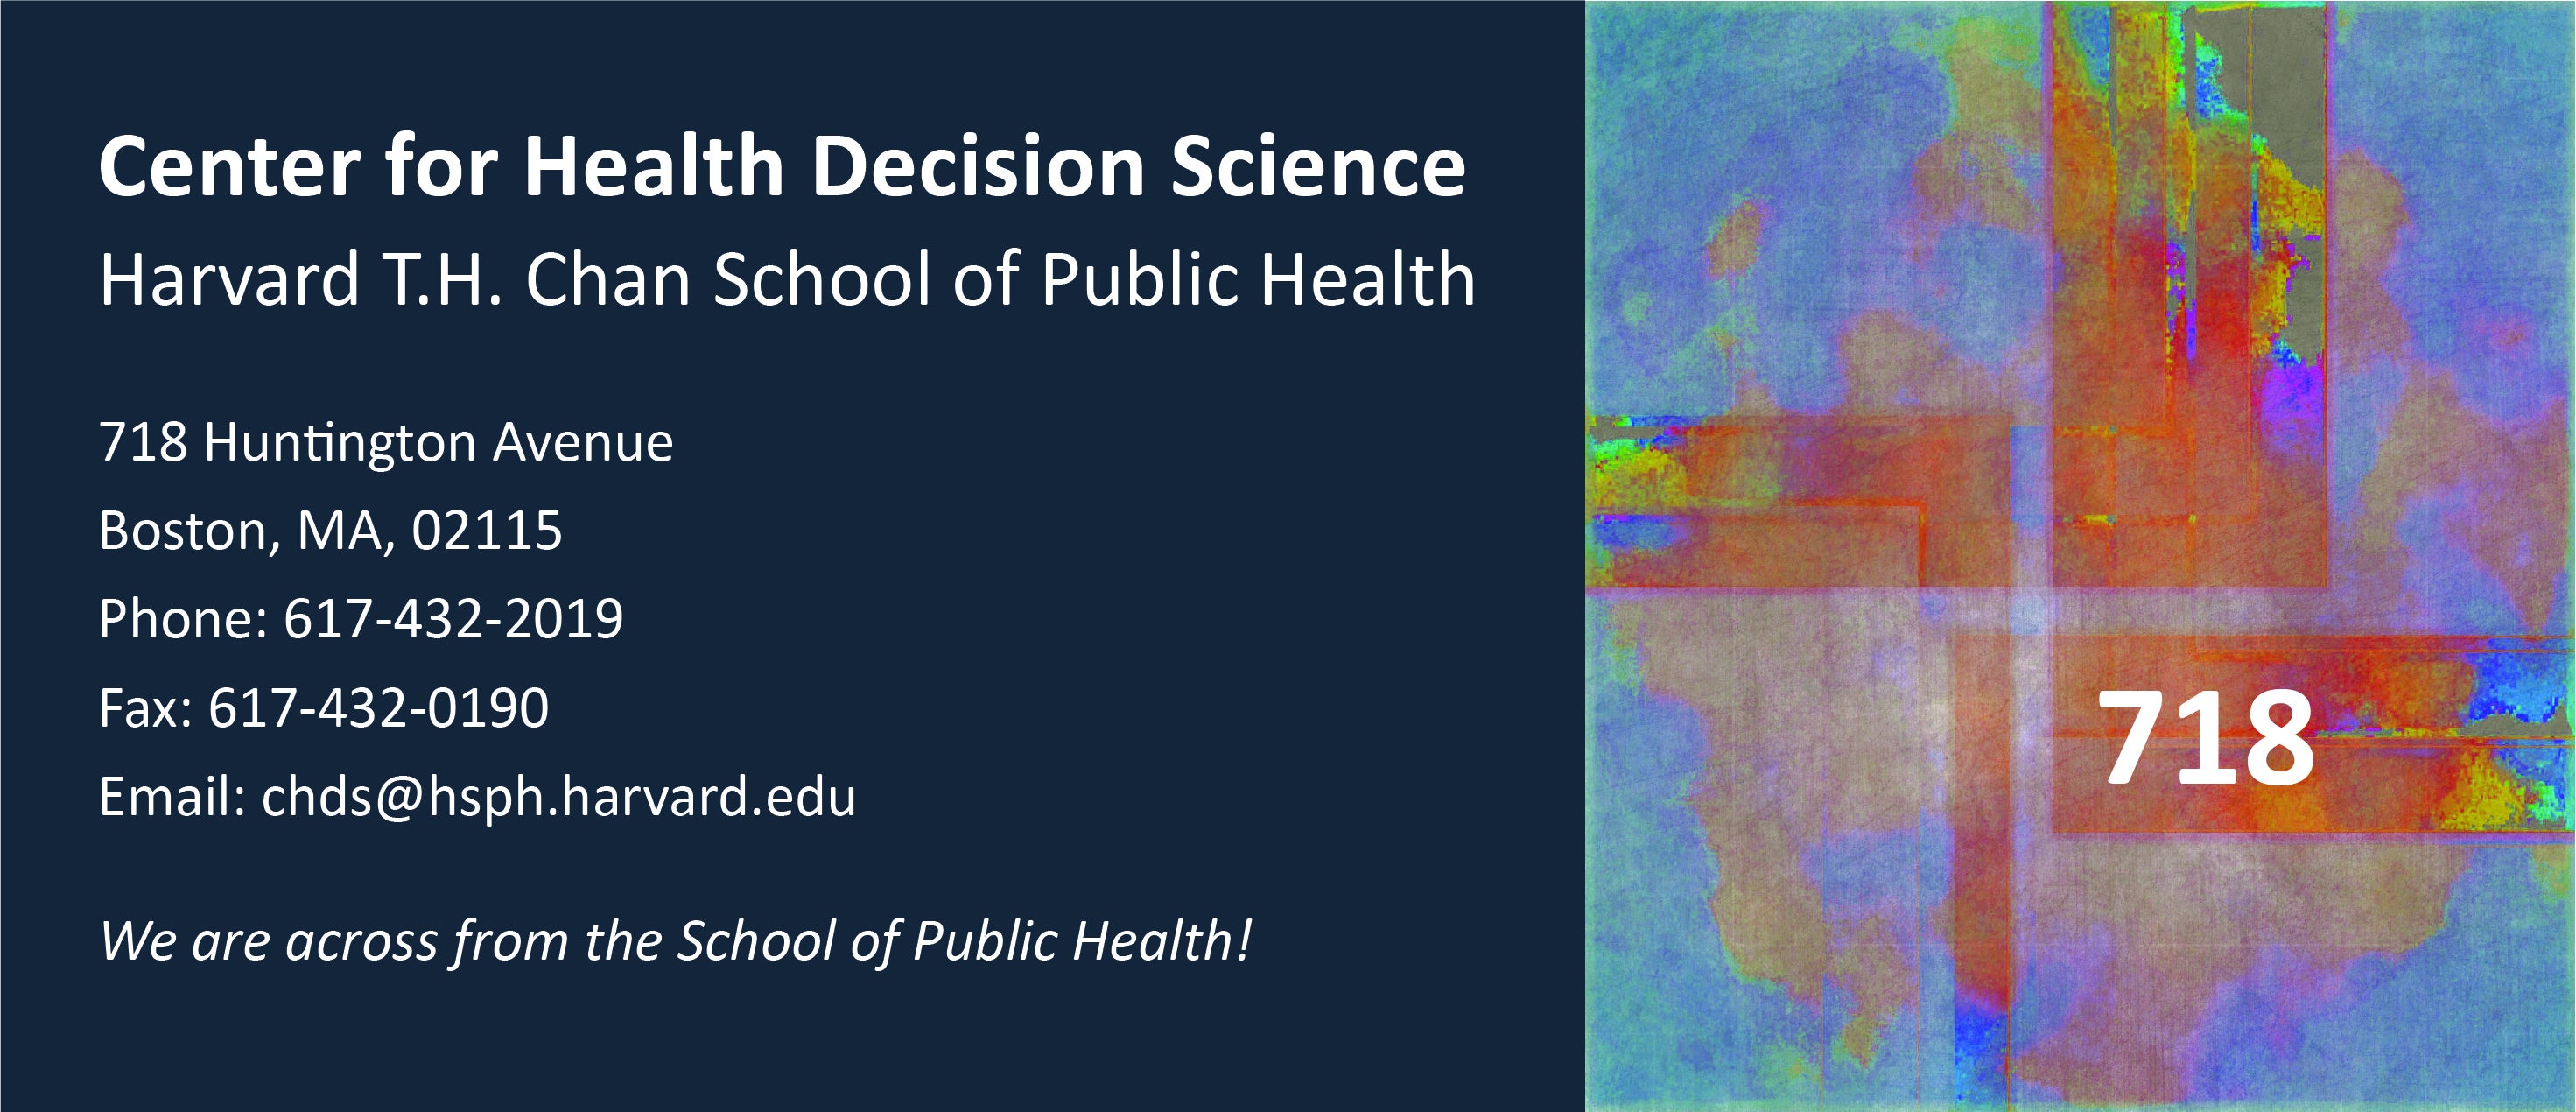 Center for Health Decision Science, Harvard T.H. Chan School of Public Health, 718 Huntington Avenue, Boston, MA 02115, Phone: 617-432-2019, Fax: 617-432-0190, Email: chds@hsph.harvard.edu. We are across from the School of Public Health!